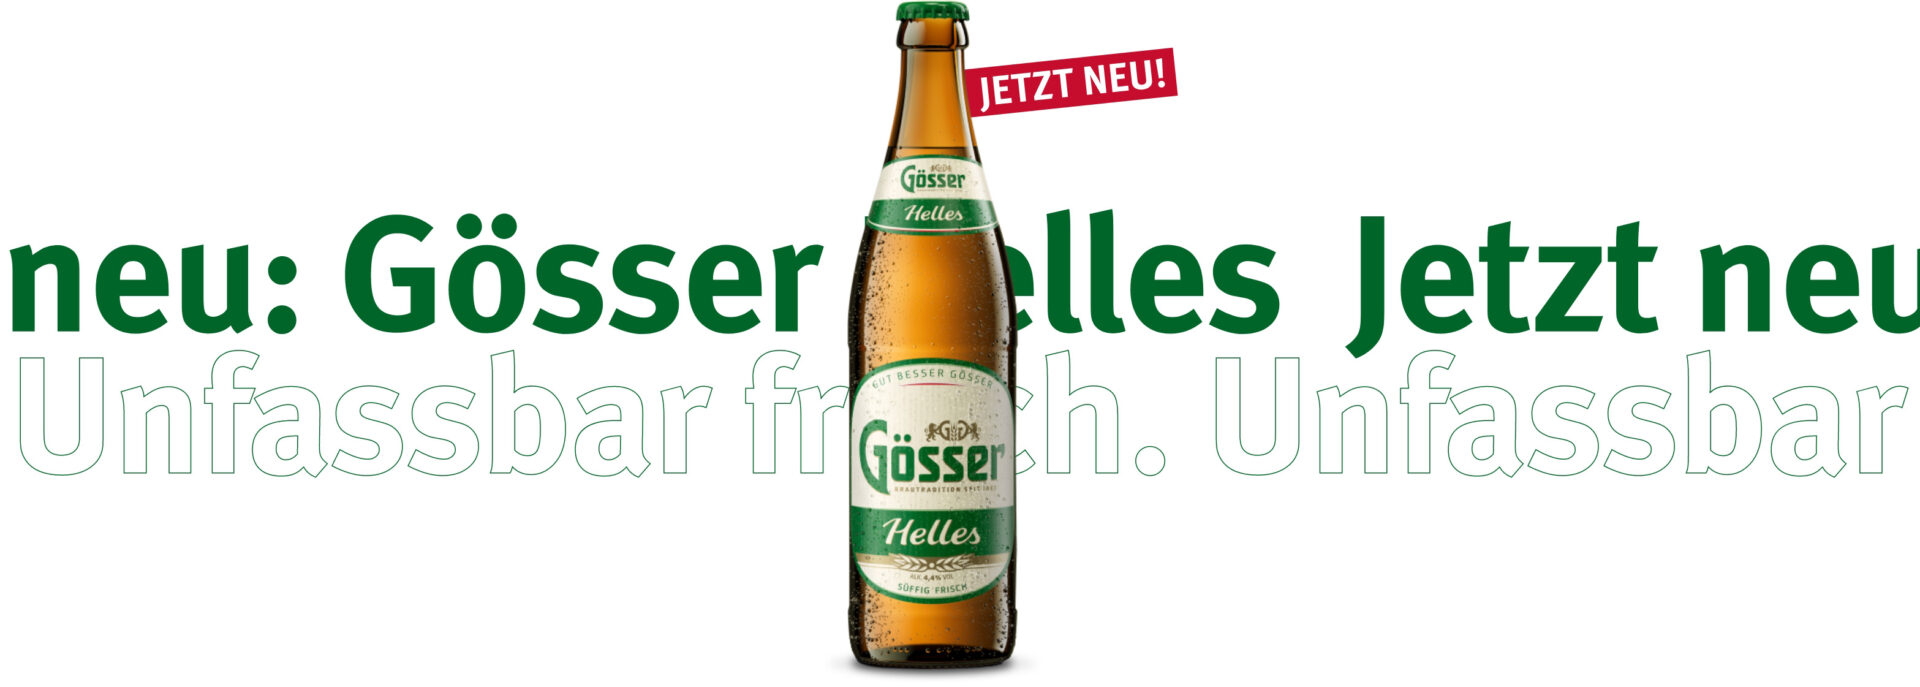 Gösser Helles Flasche vor Schriftzug: Jetzt neu: Gösser Helles, Unfassbar Frisch.